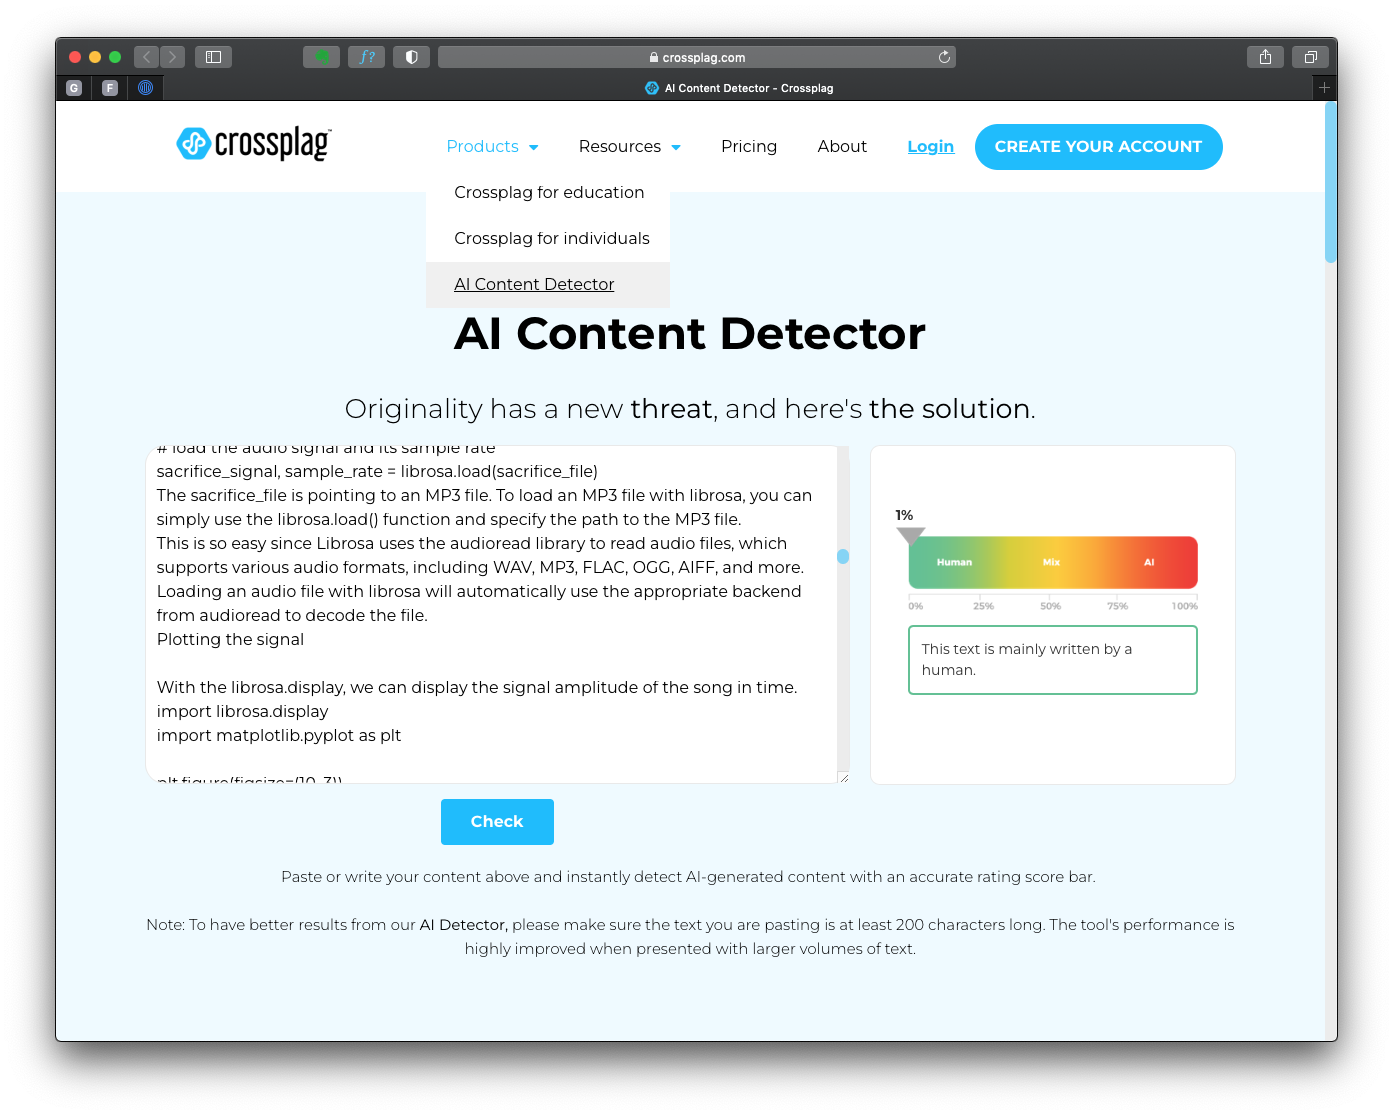 Crossplag AI Content Detector online